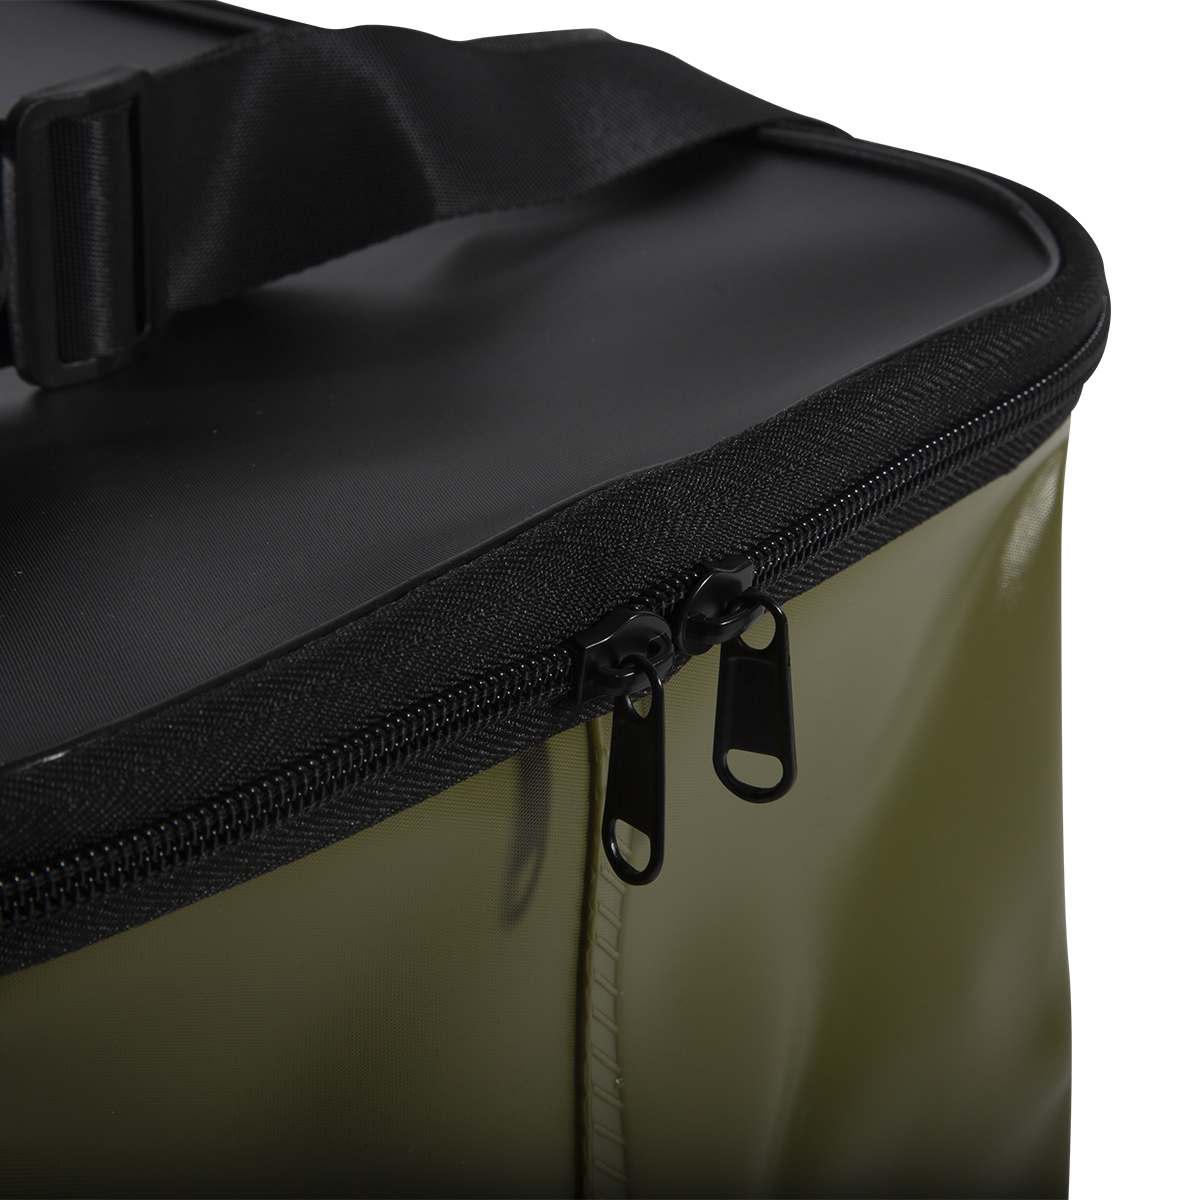 Tactic Carp Waterproof Luggage Wasserdichte Taschen - Big & Medium Green